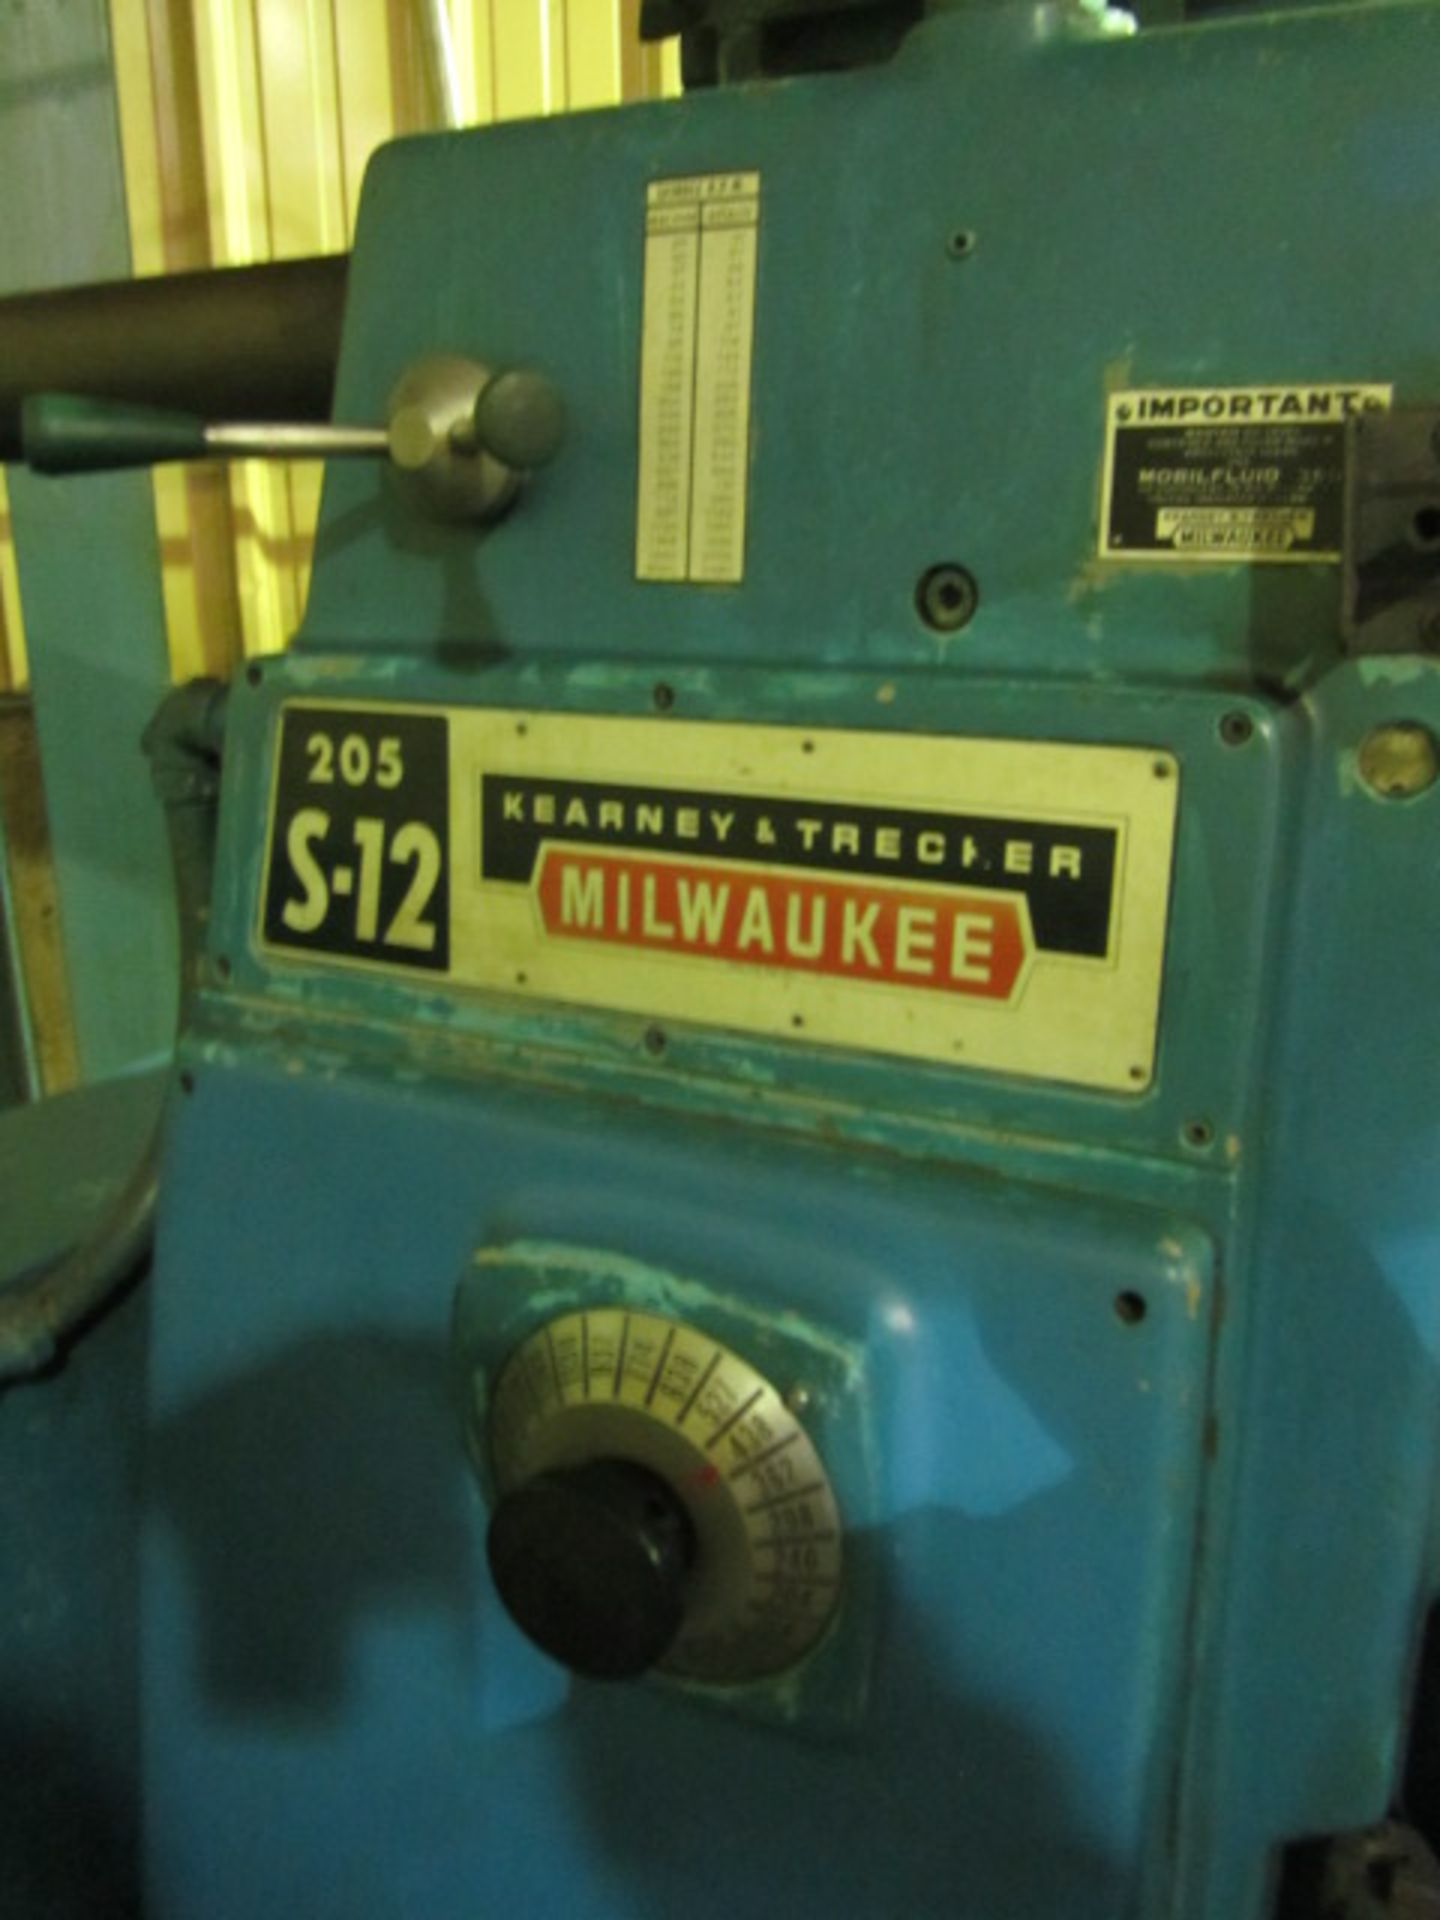 Kearney & Trecker Model S12, 205 Milwaukee Horizontal Milling Machine with 12'' x 56'' Power Feed - Image 6 of 6